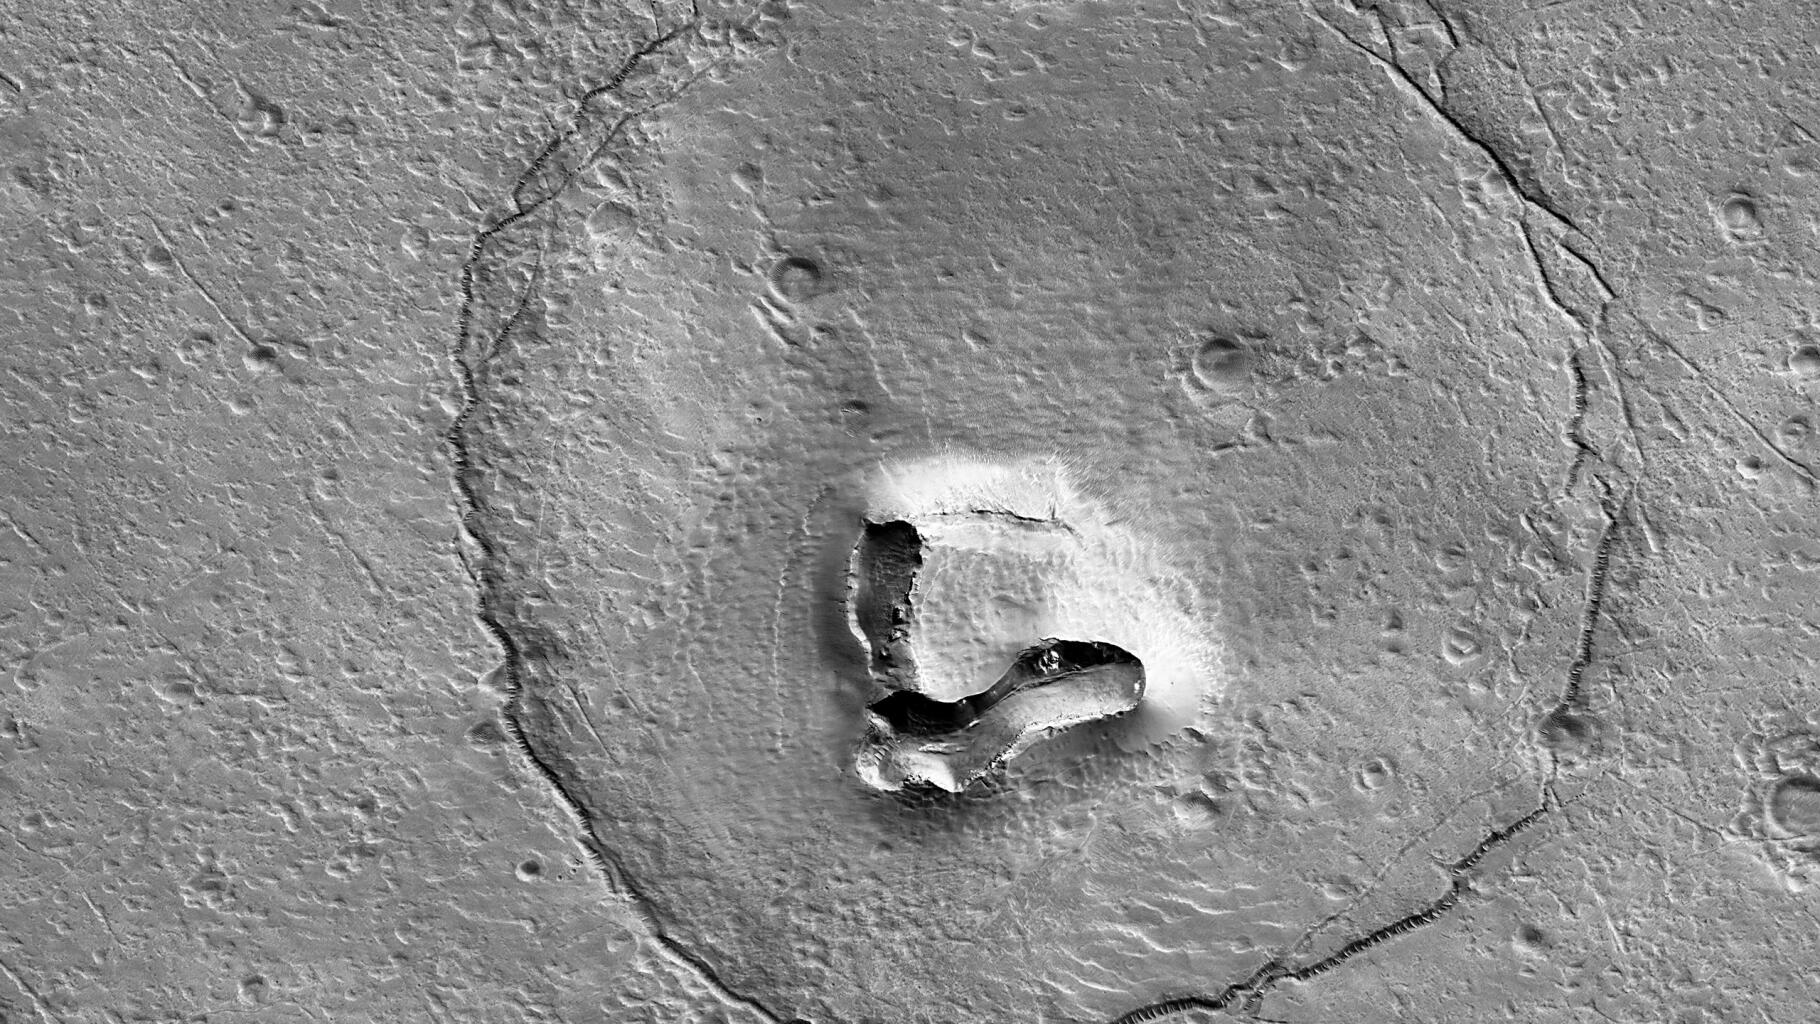 La NASA raffigura un orso su Marte